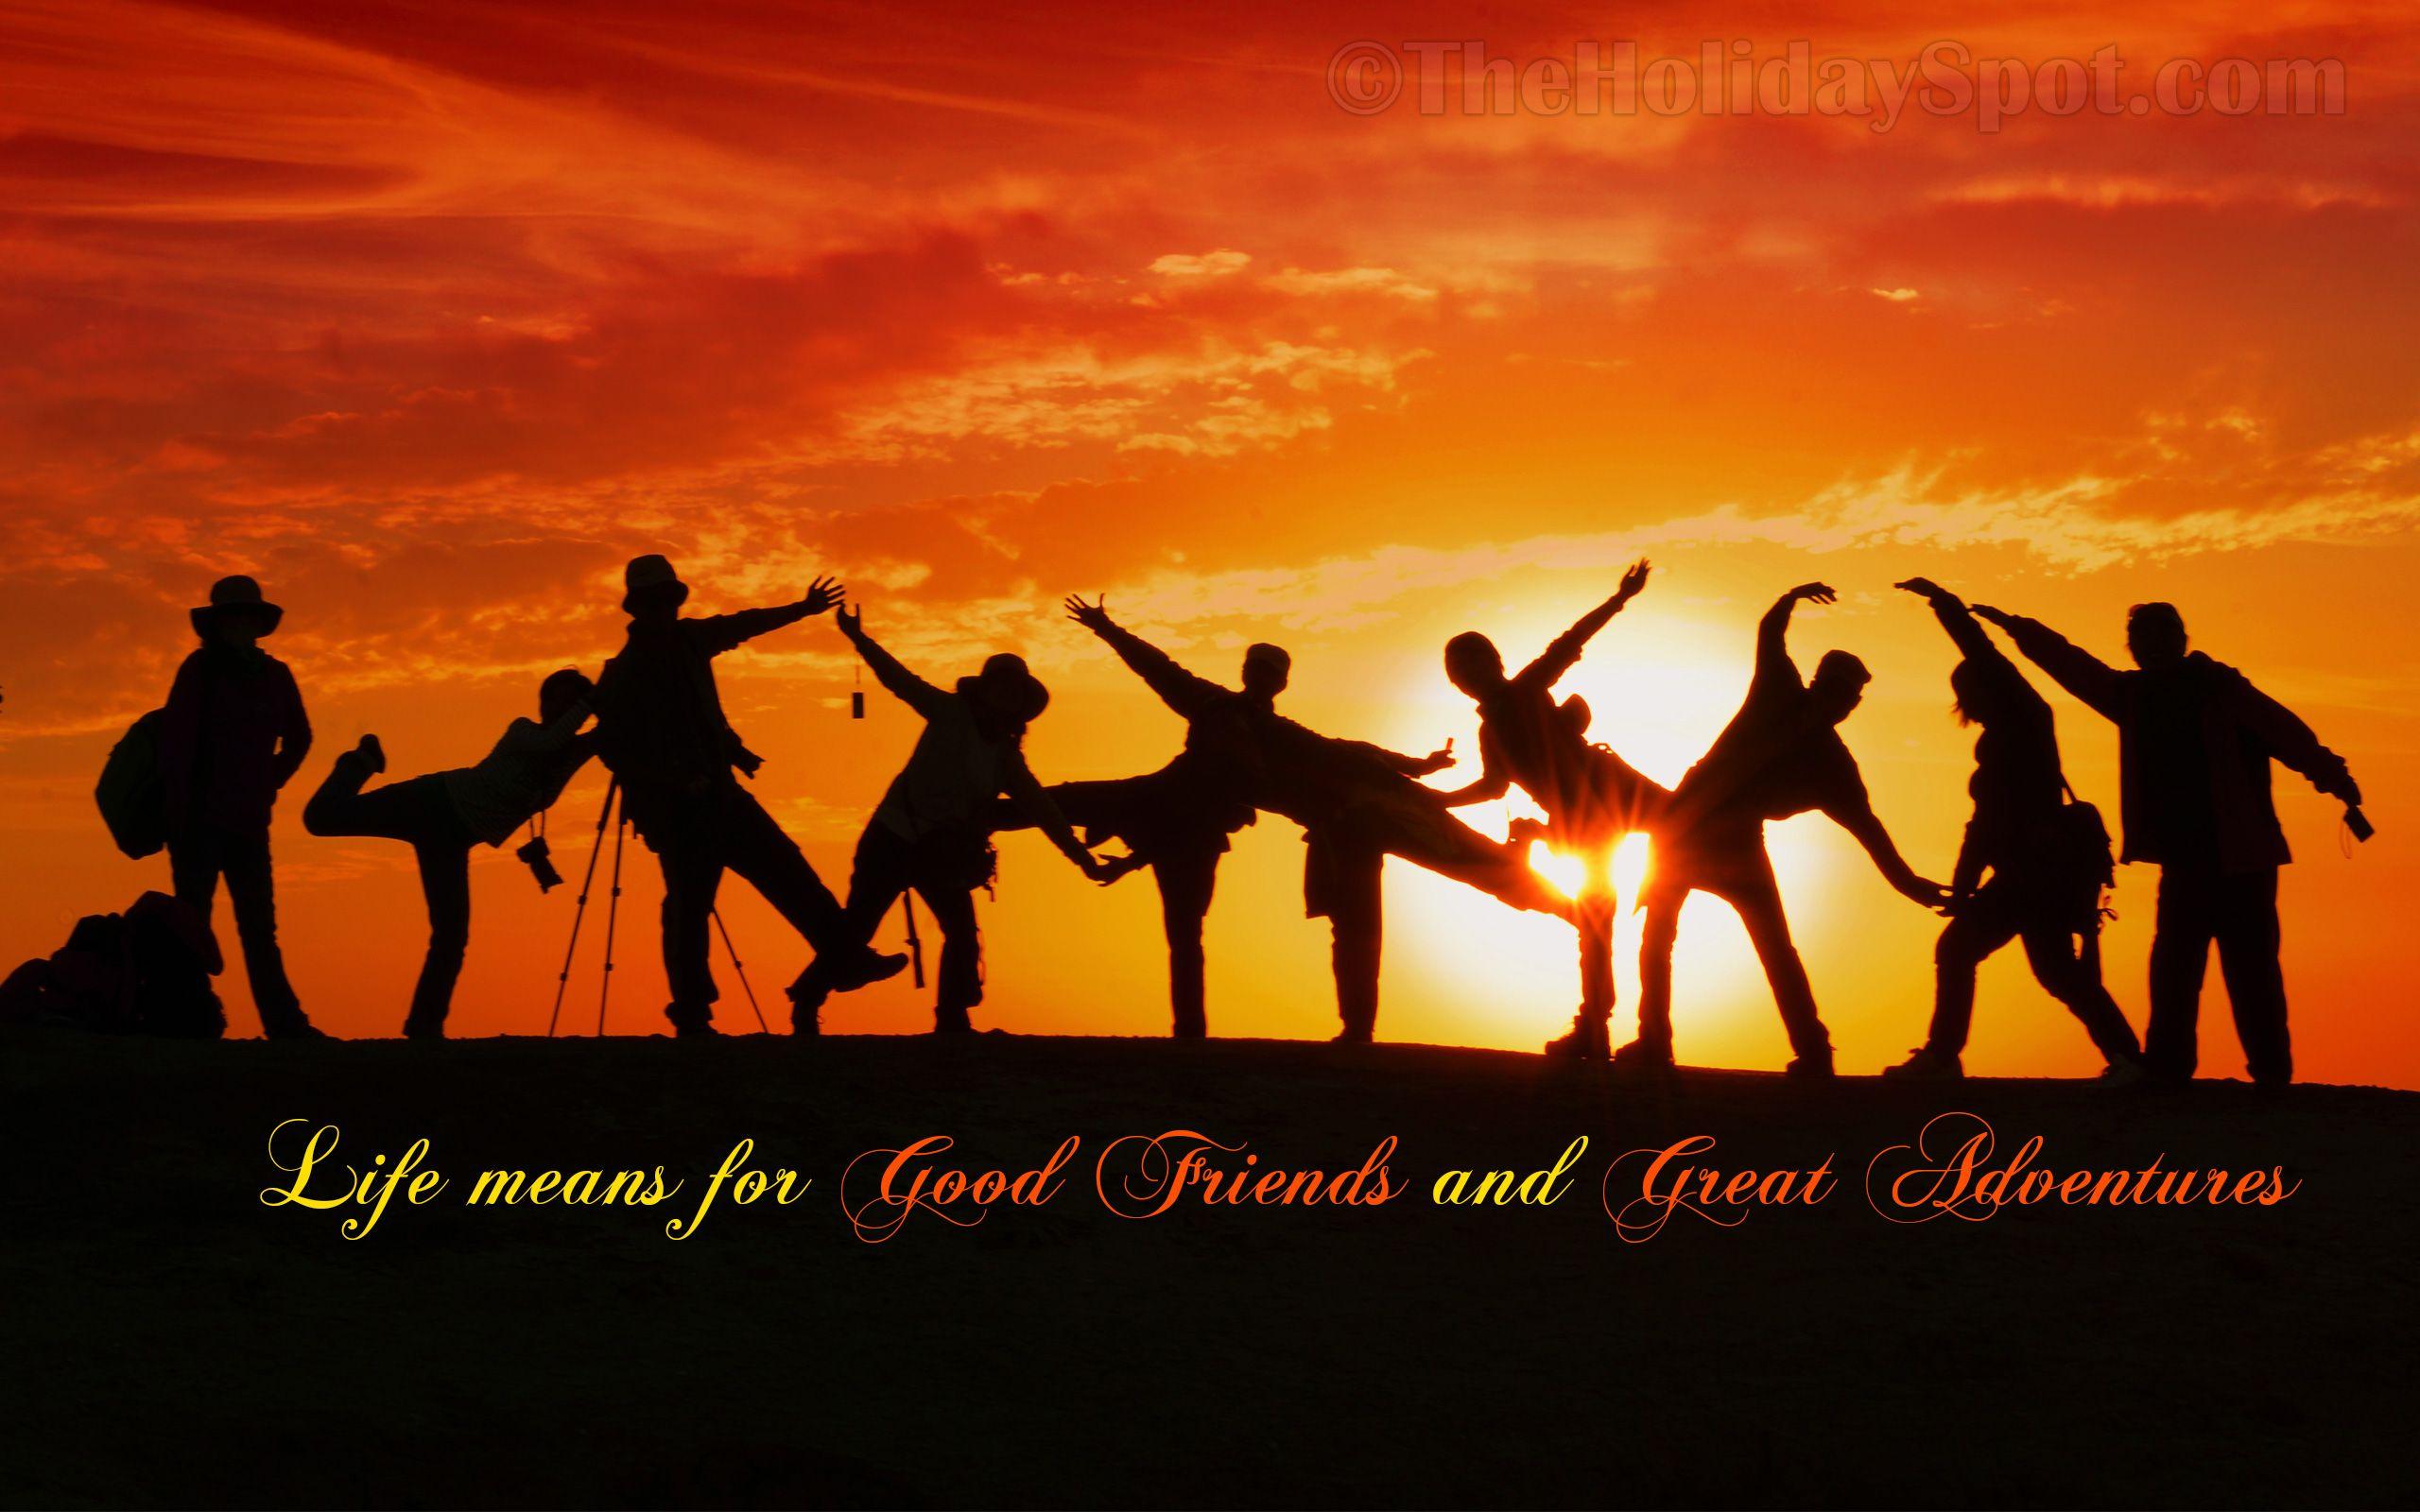 Friendship Day Wallpaper 2020. Friendship Image HD. Download